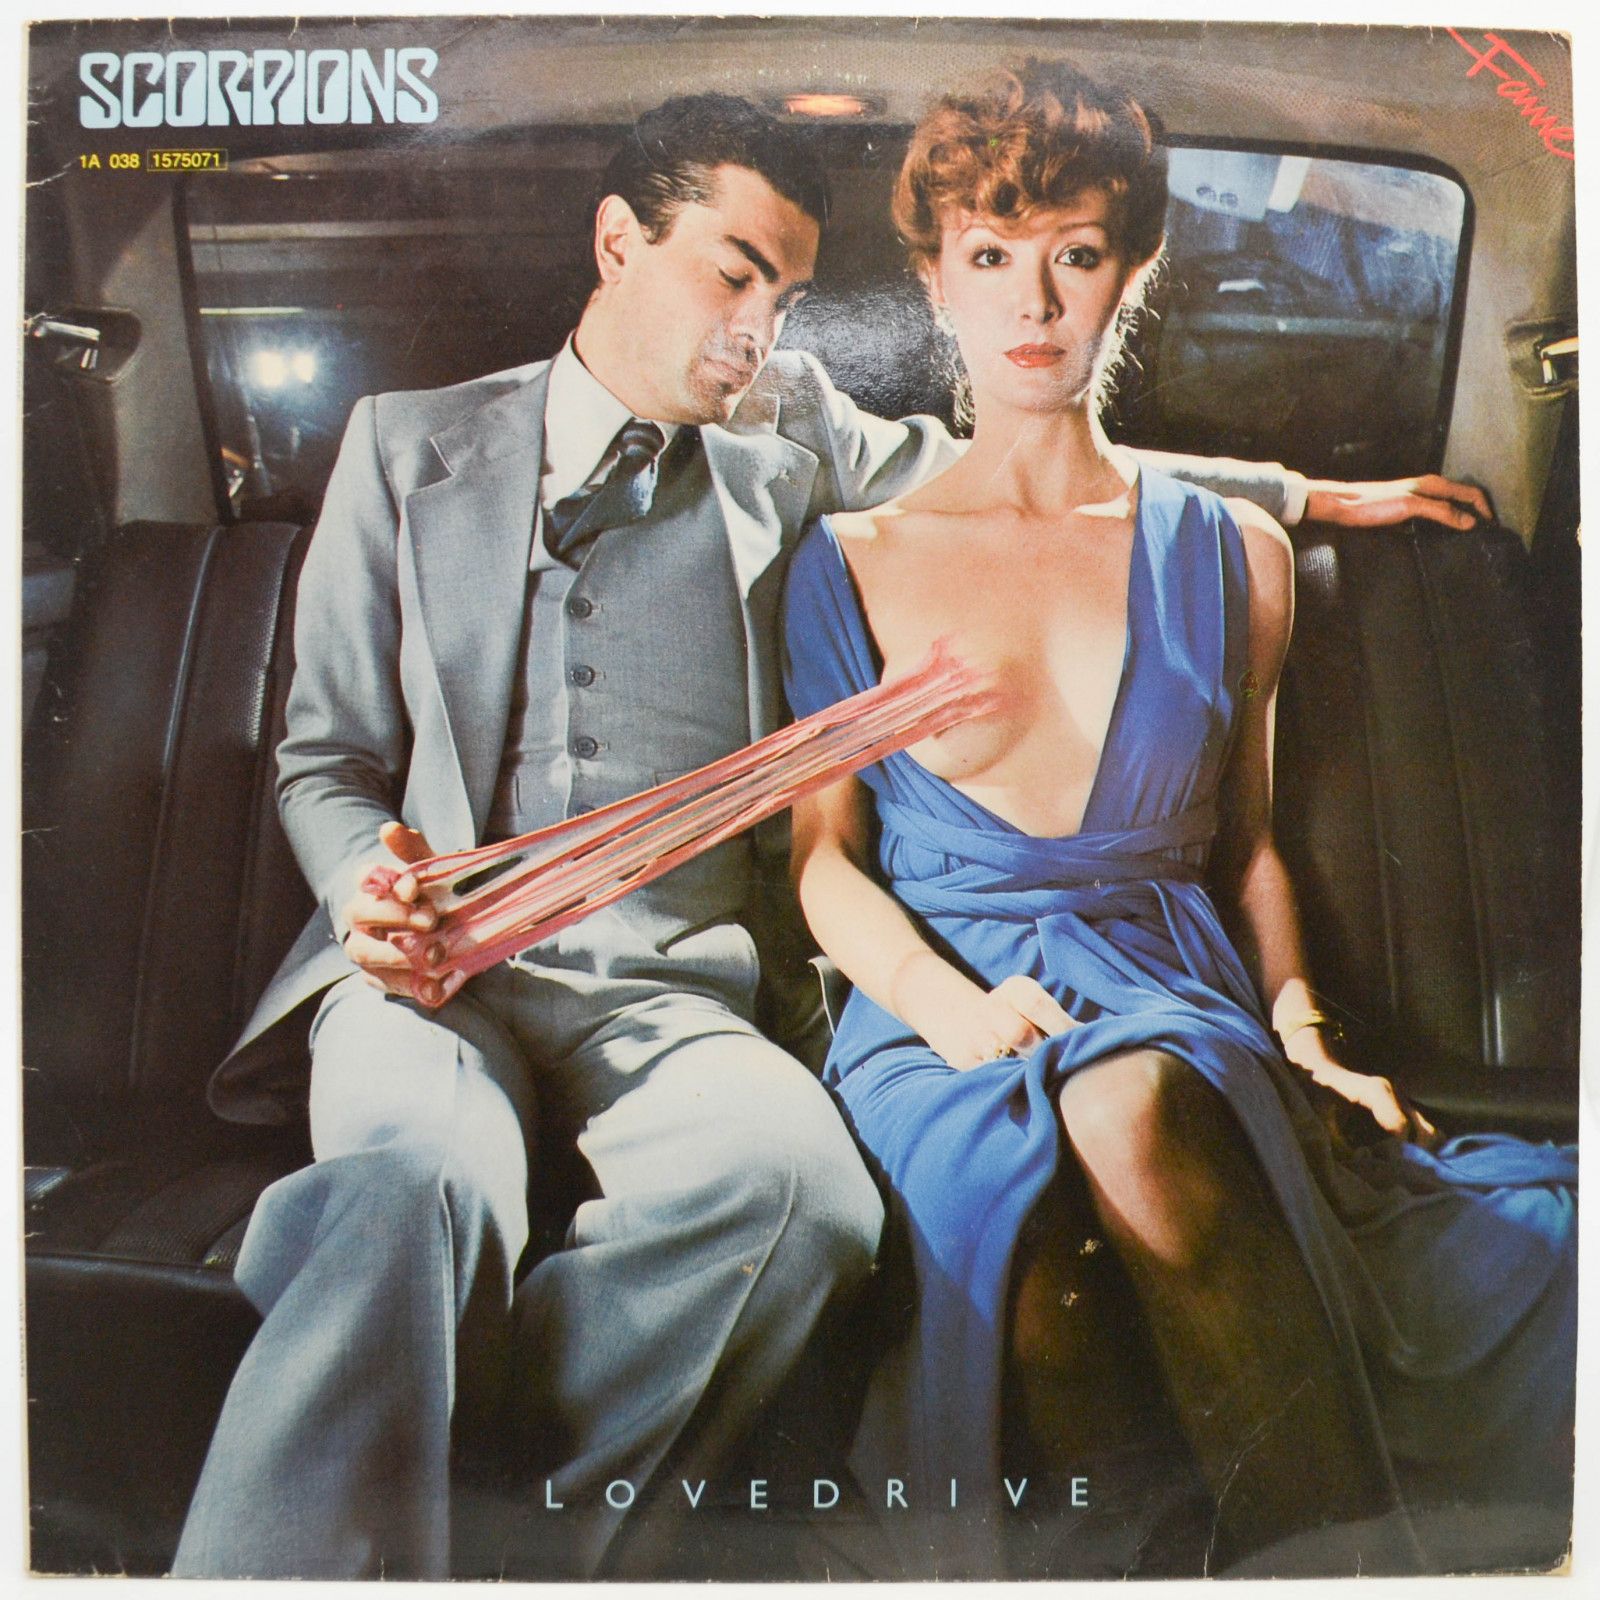 Scorpions — Lovedrive, 1979